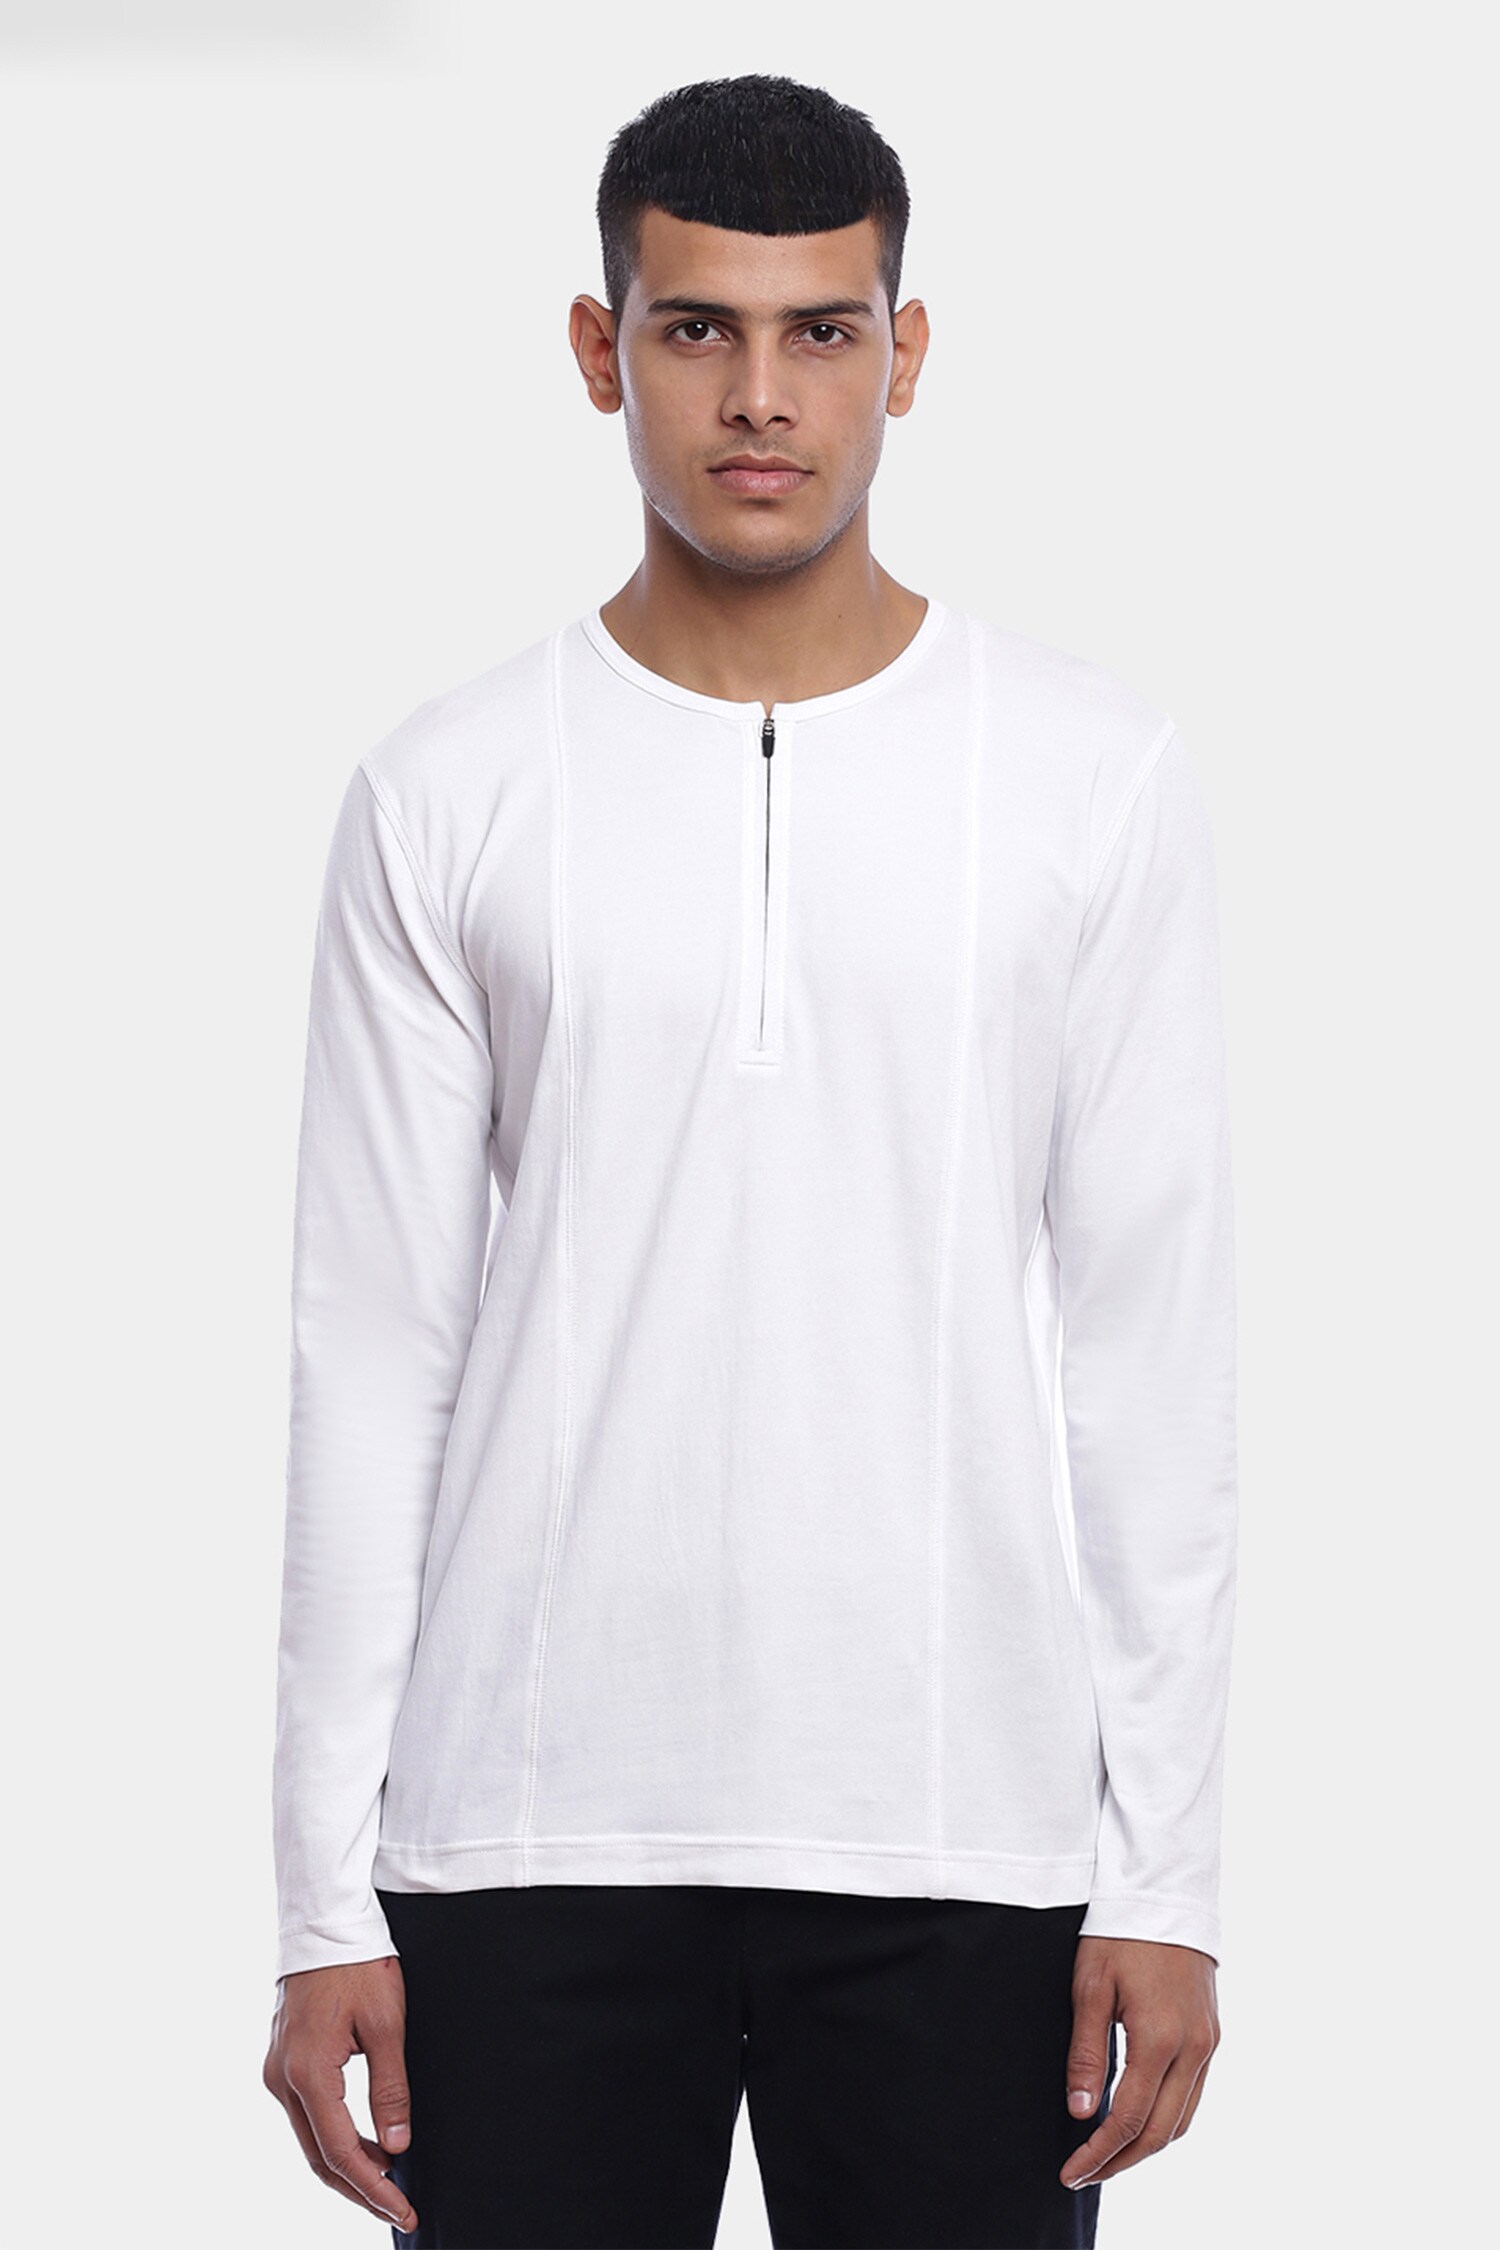 Buy Genes Lecoanet Hemant White Single Jersey Leif T-shirt Online | Aza ...